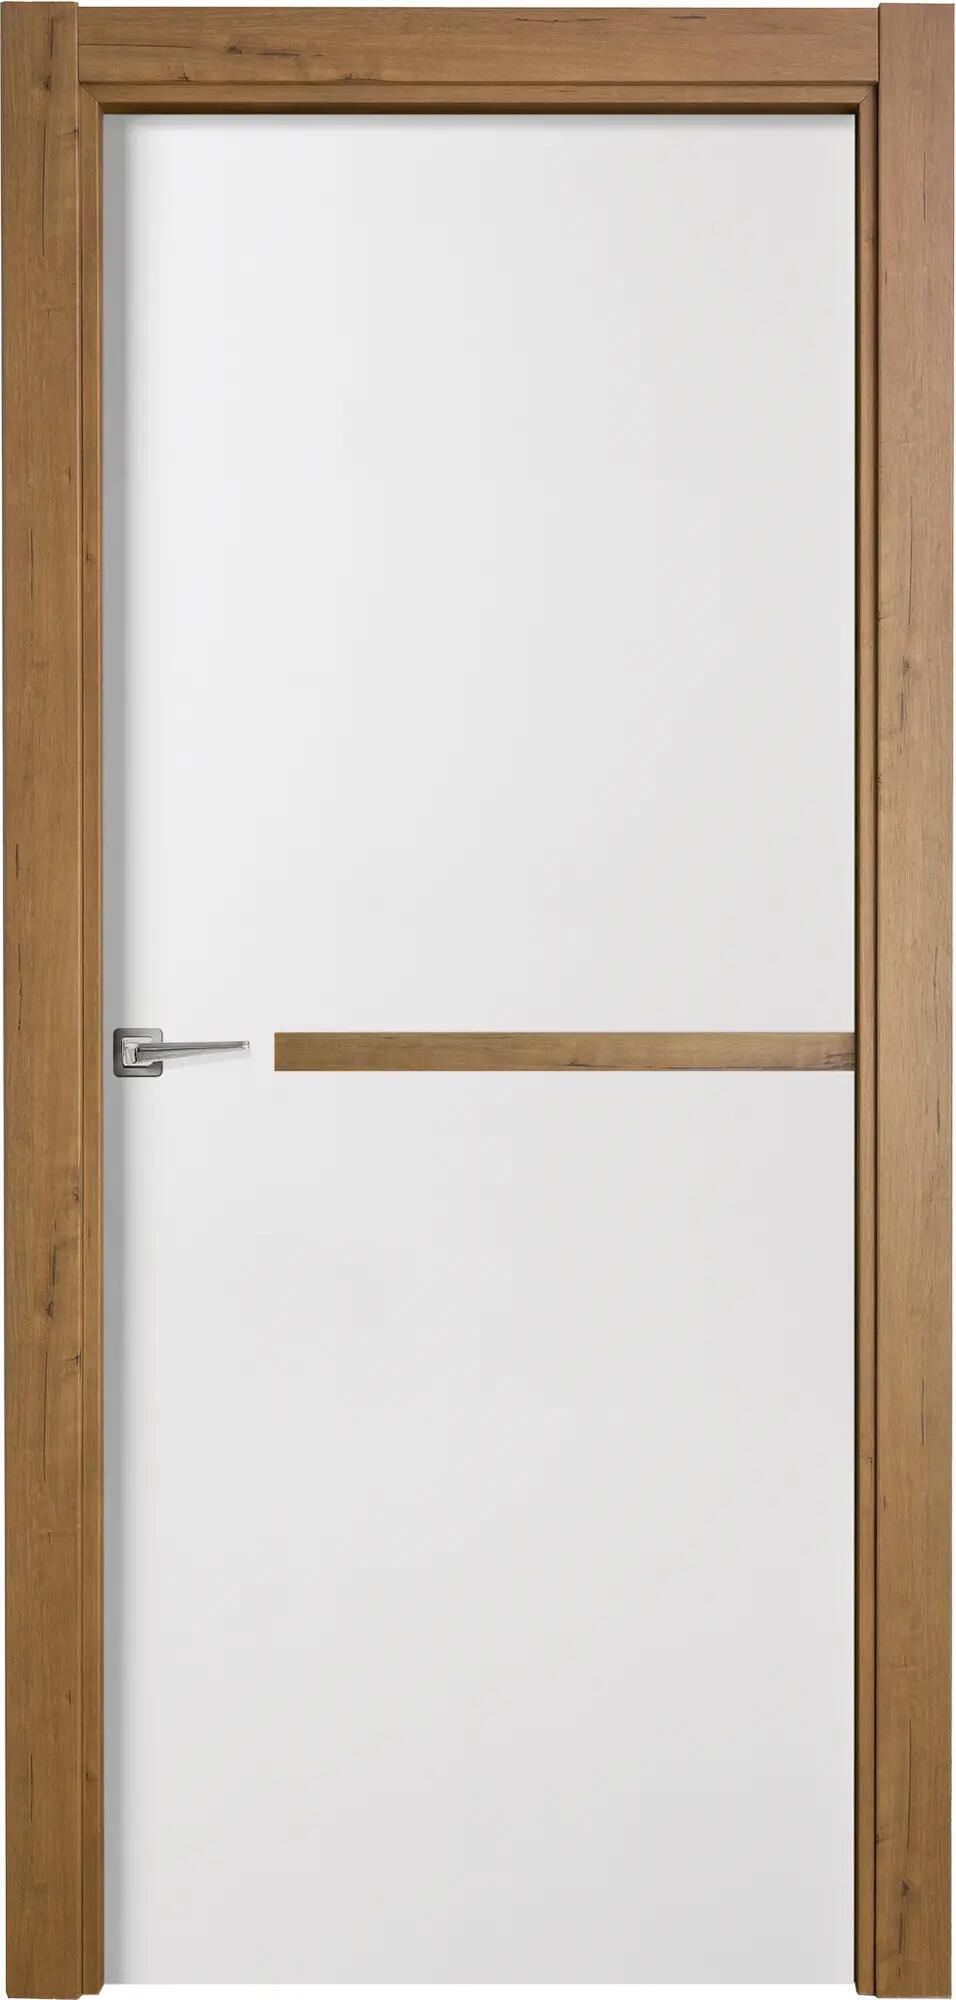 Puerta denver c-gold blanco apertura izquierda de 11x92.5 cm